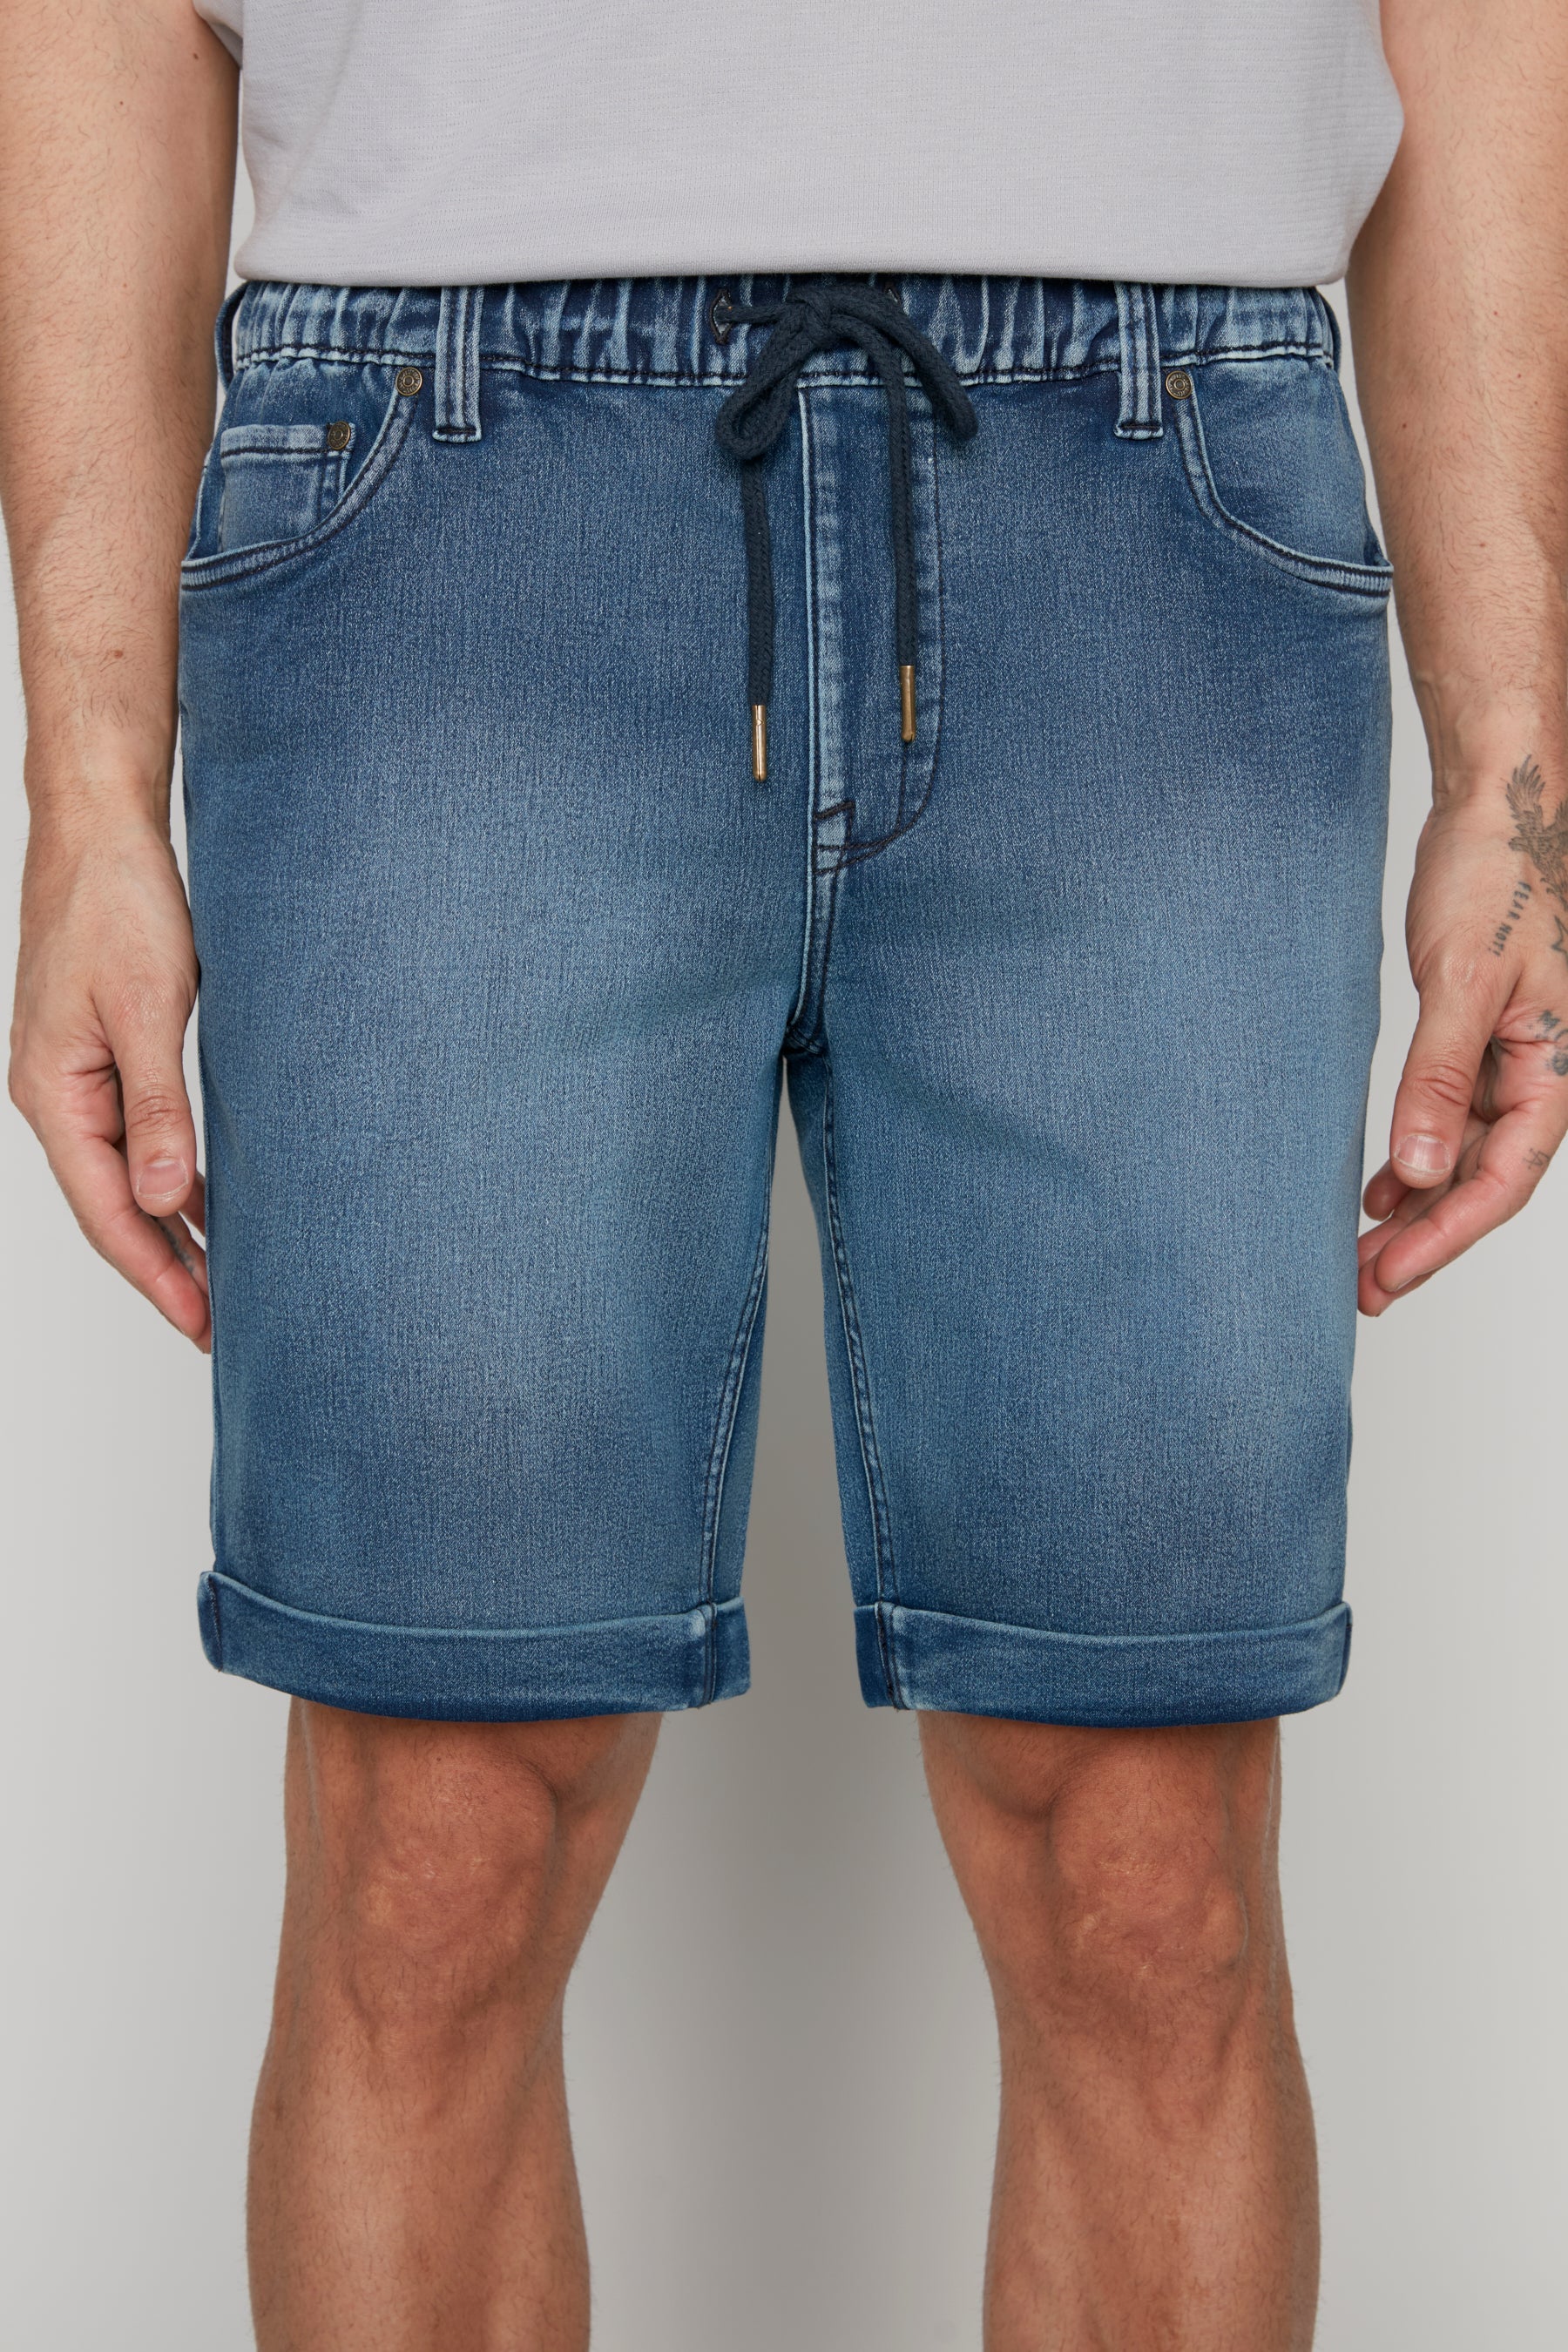 LENNON - Mens Rolled-Up Shorts - Medium Blue Acid Wash DNM.WORKS